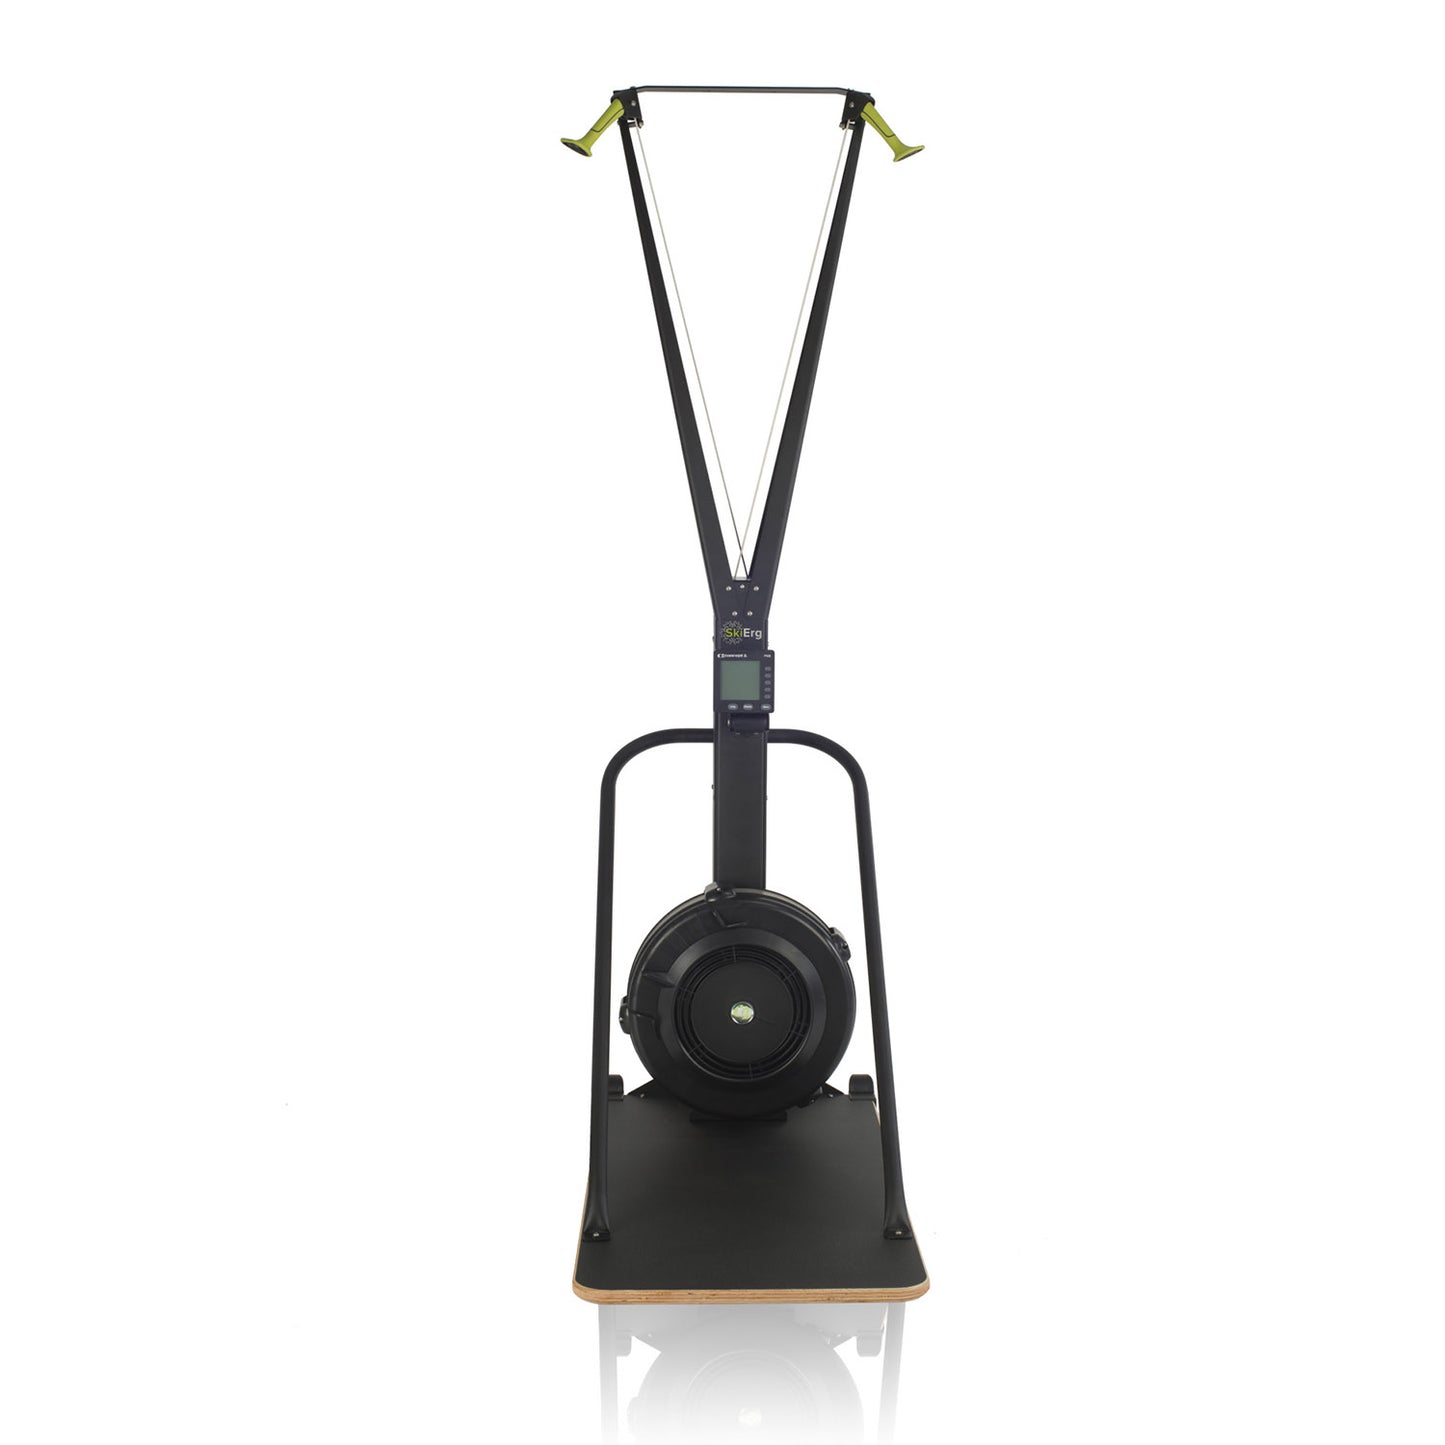 Concept 2 SkiErg Indoor Rower With Floor Stand